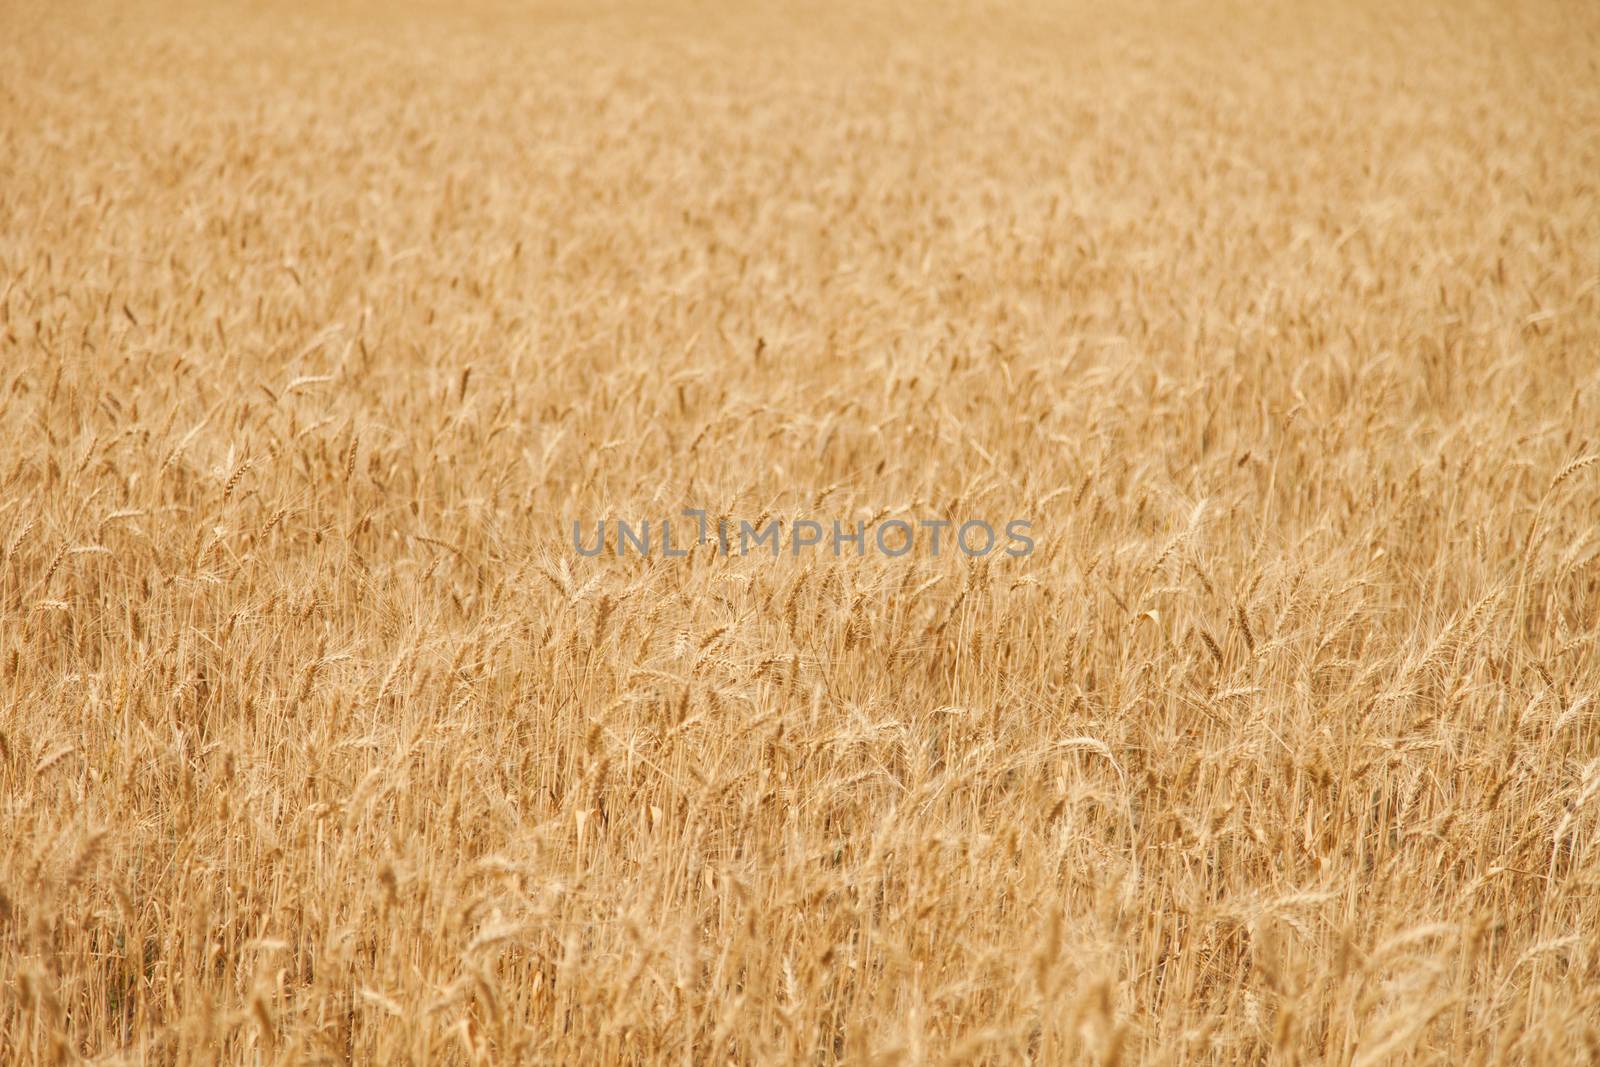 wheat field by tadeush89